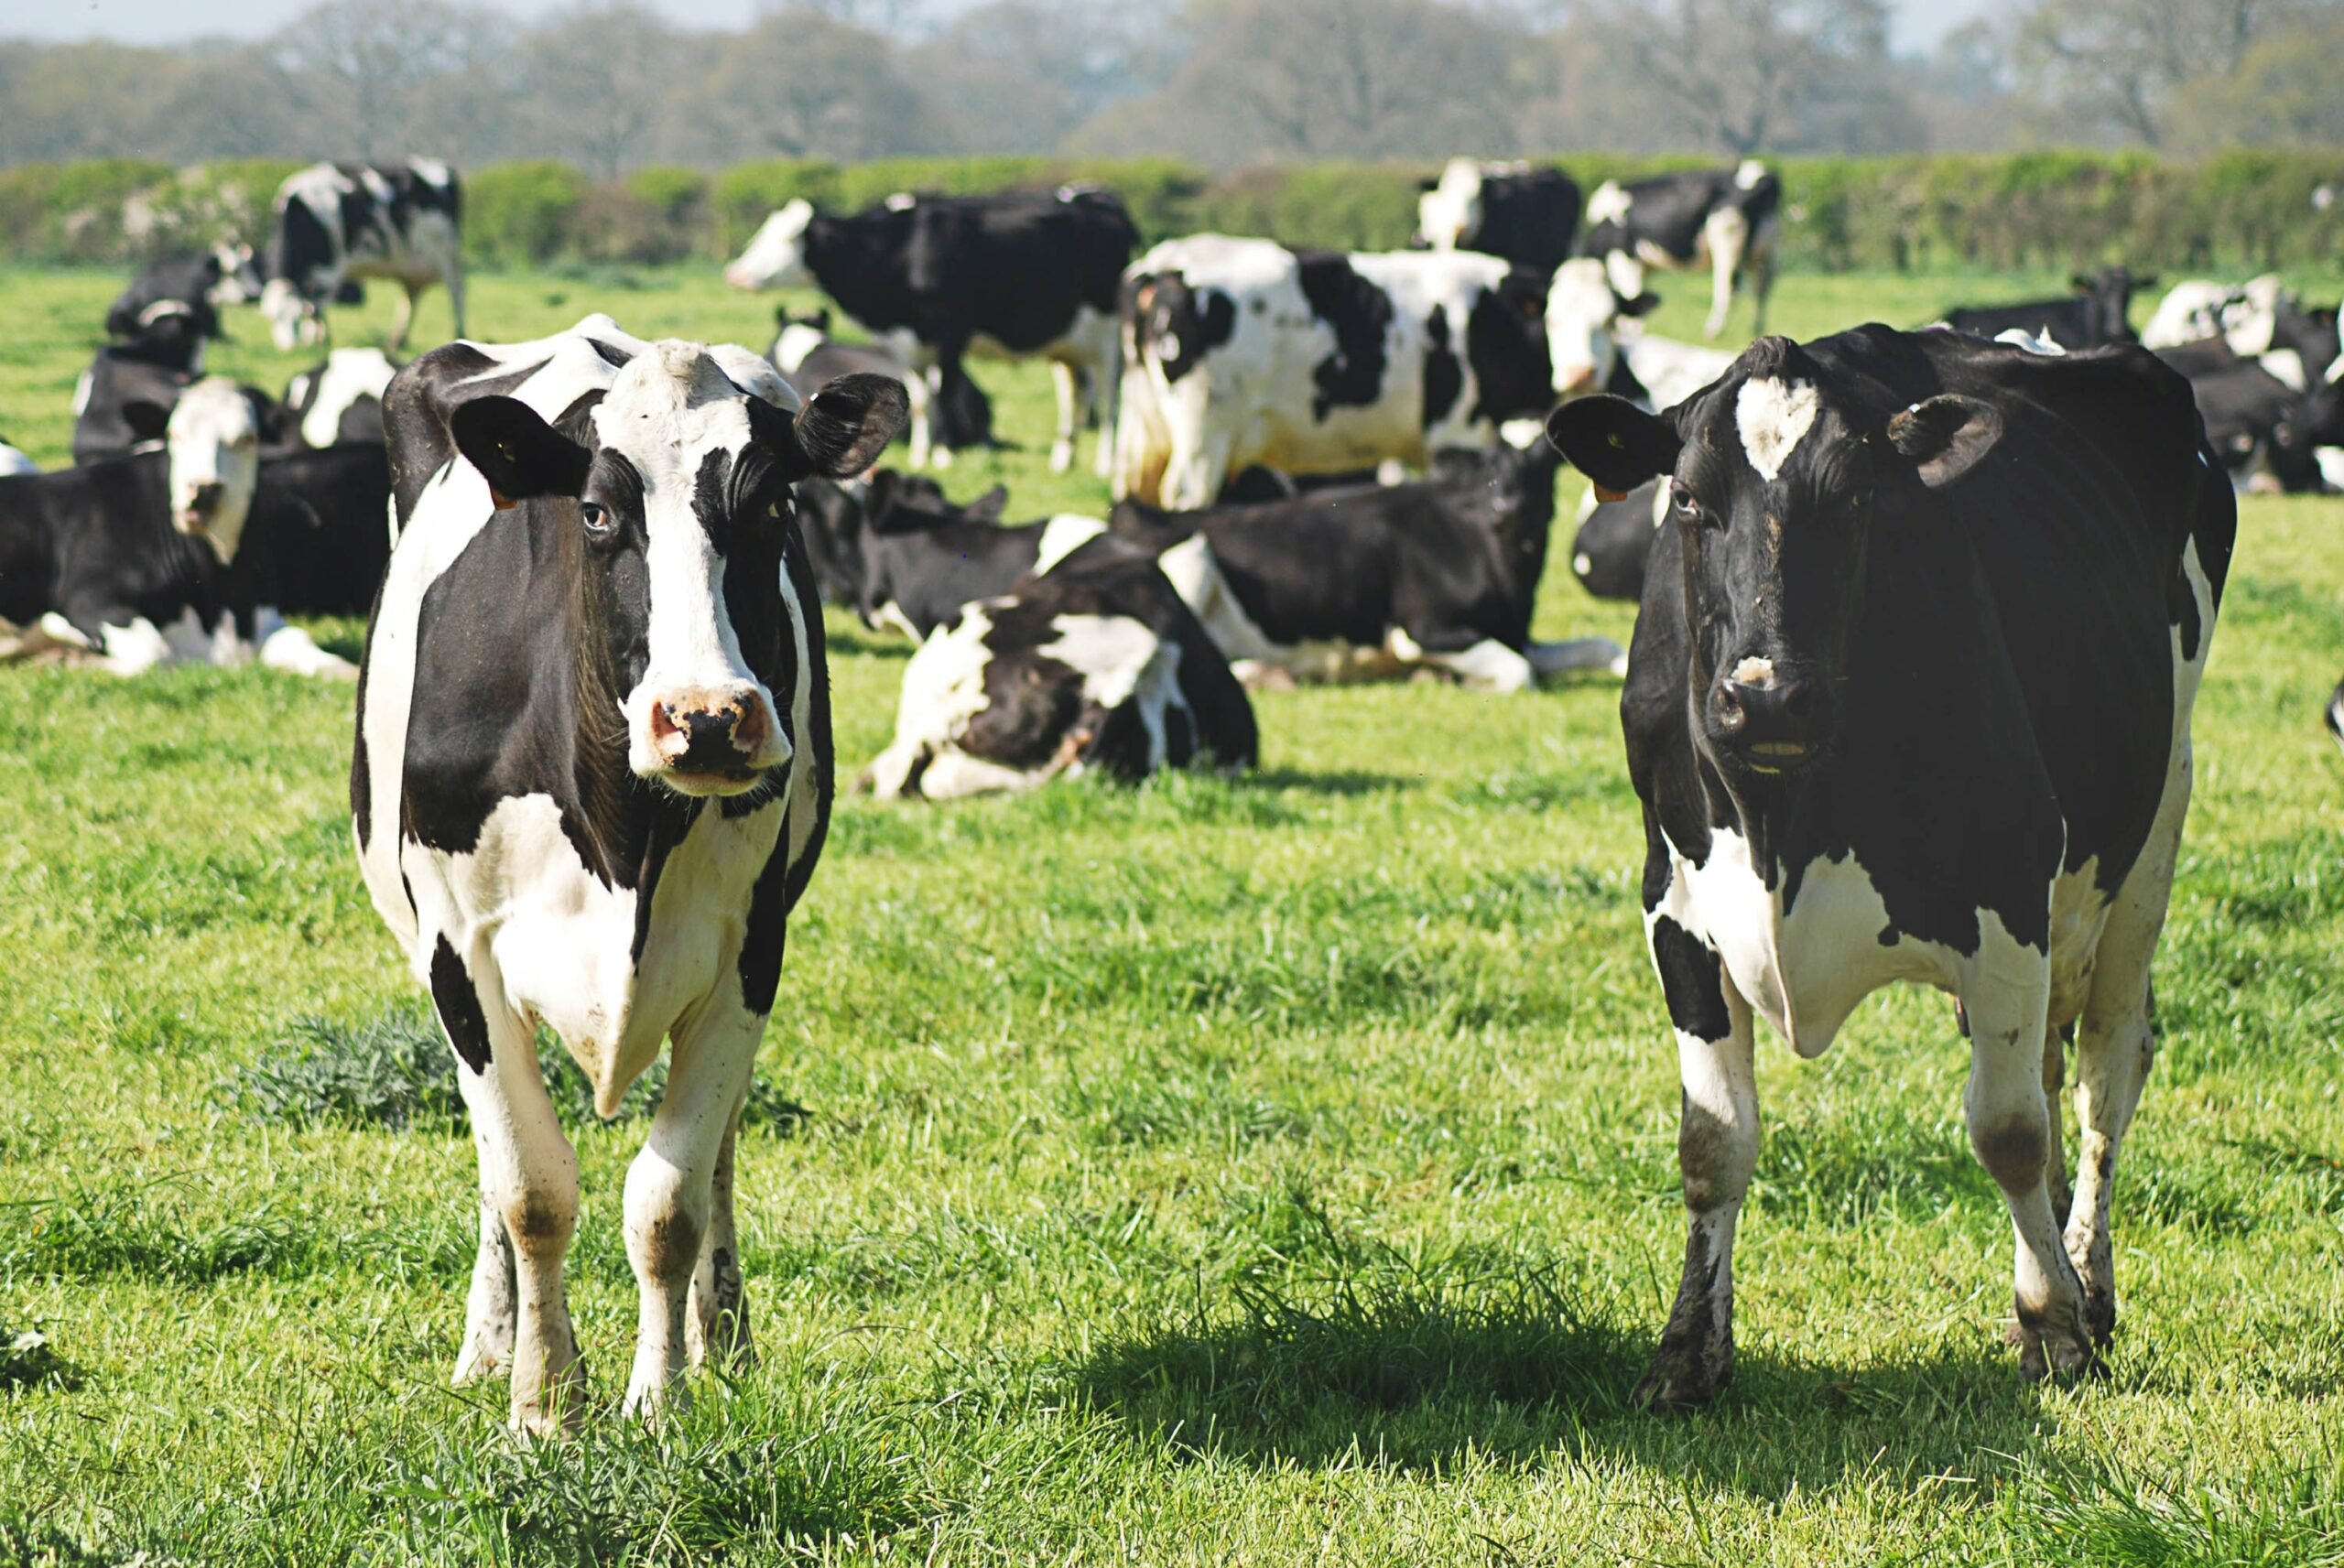 Intensive livestock farming overwhelms agroecosystems - Innovation Origins